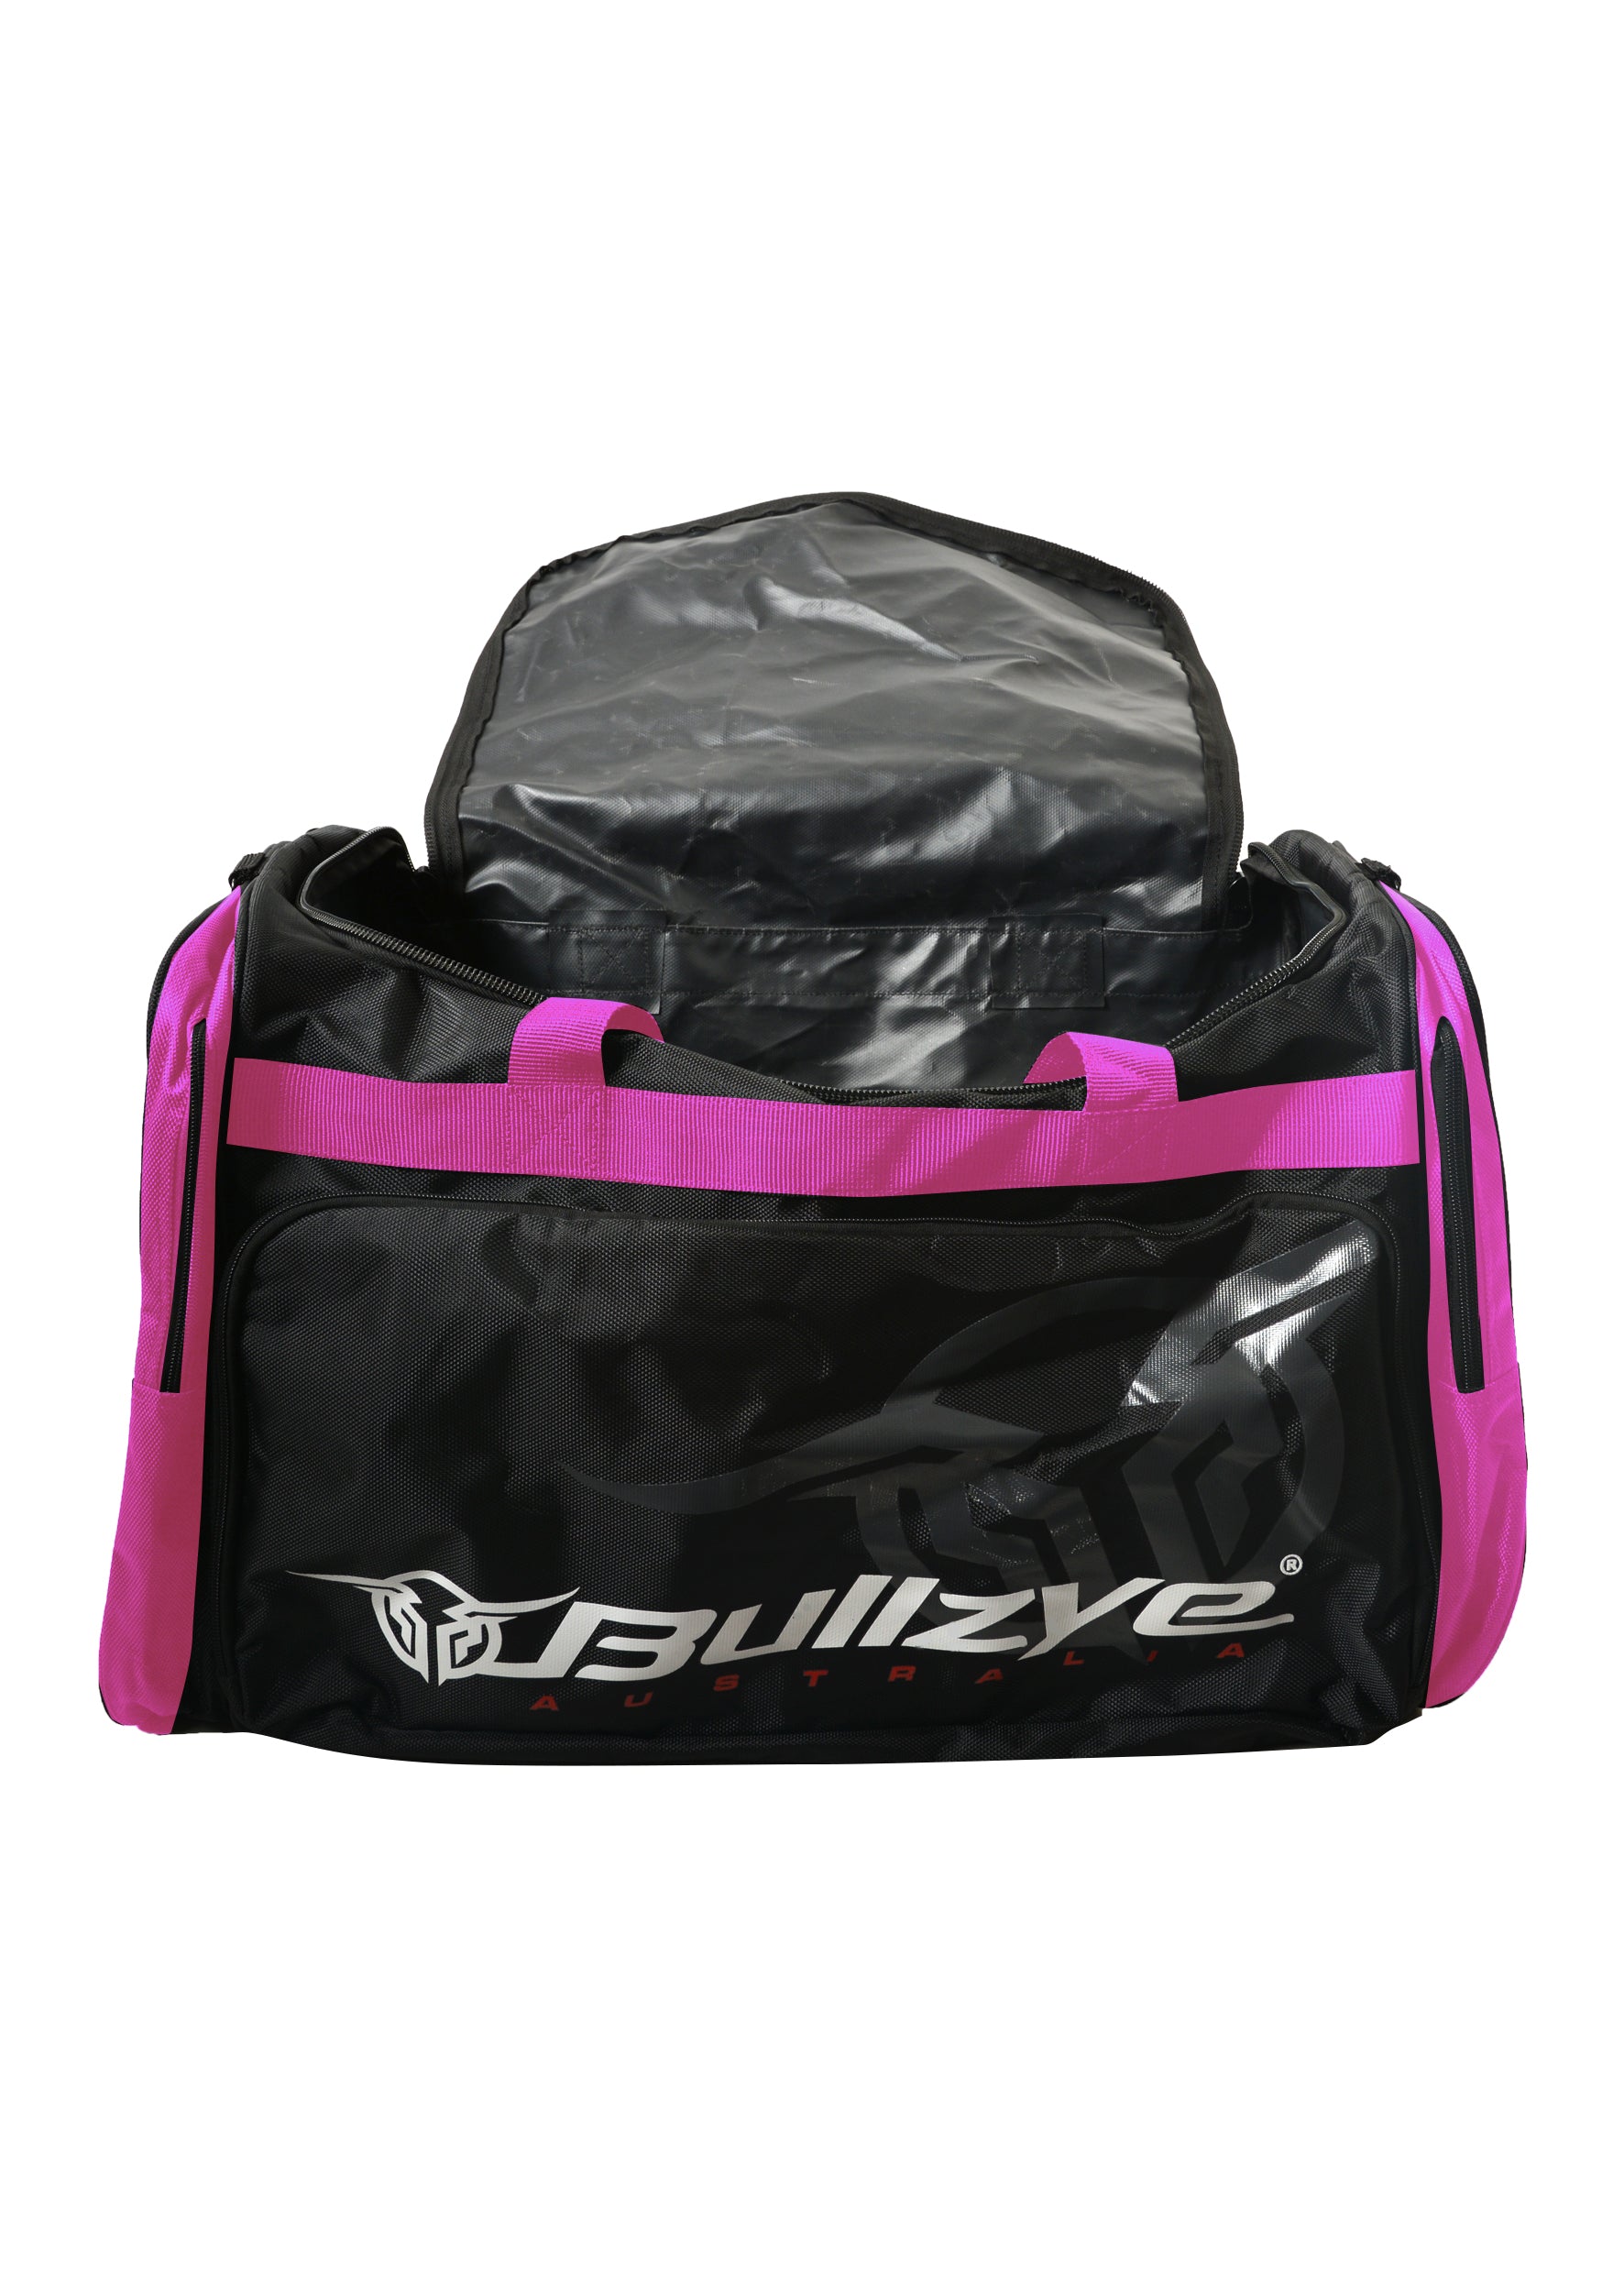 Bullzye Axle Large Gear Bag